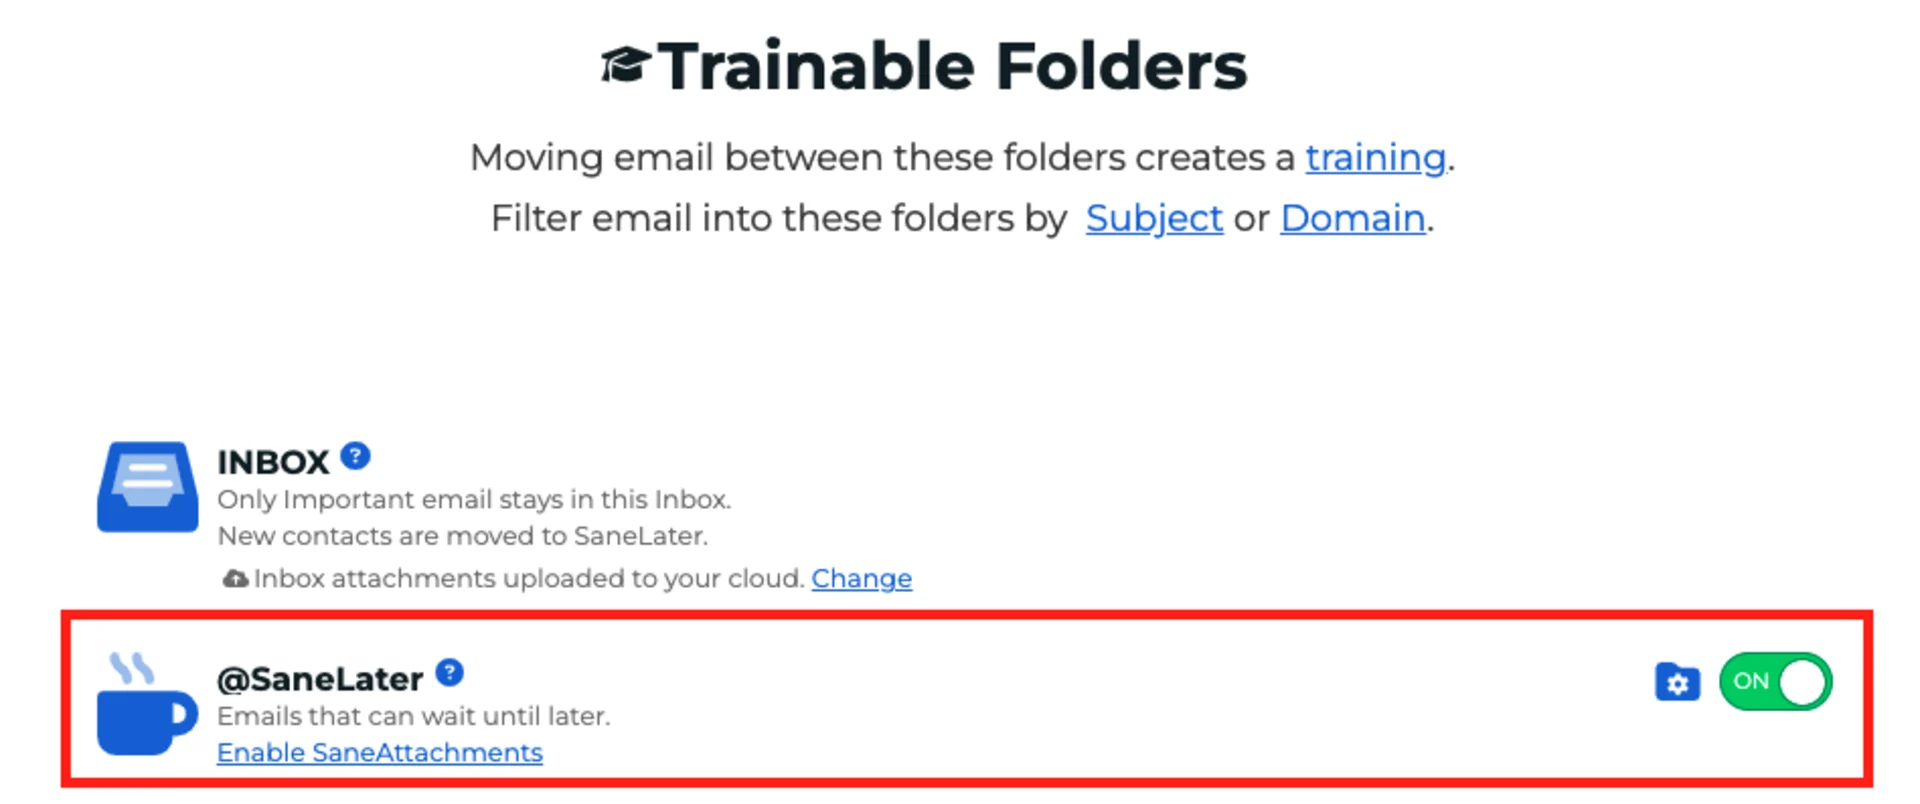 SaneLater Folder, How to Access SaneLater